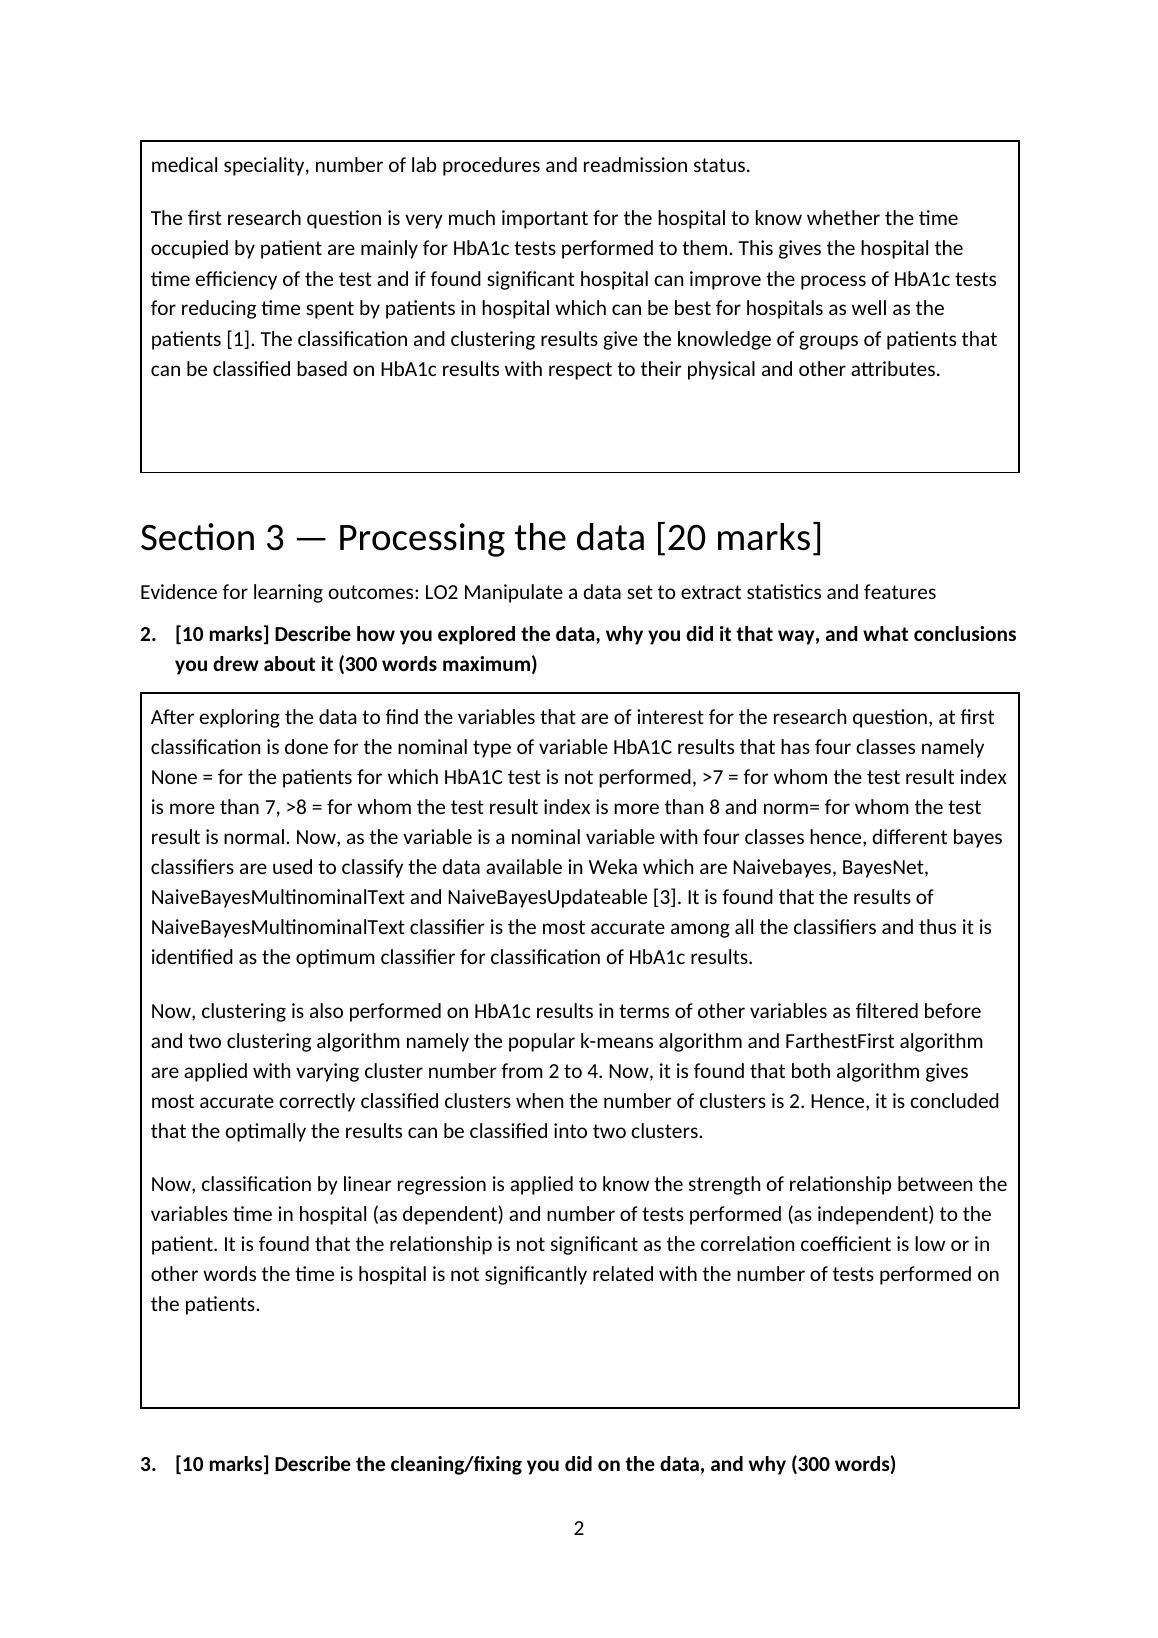 Assignment Report: Big Data Analytics_2